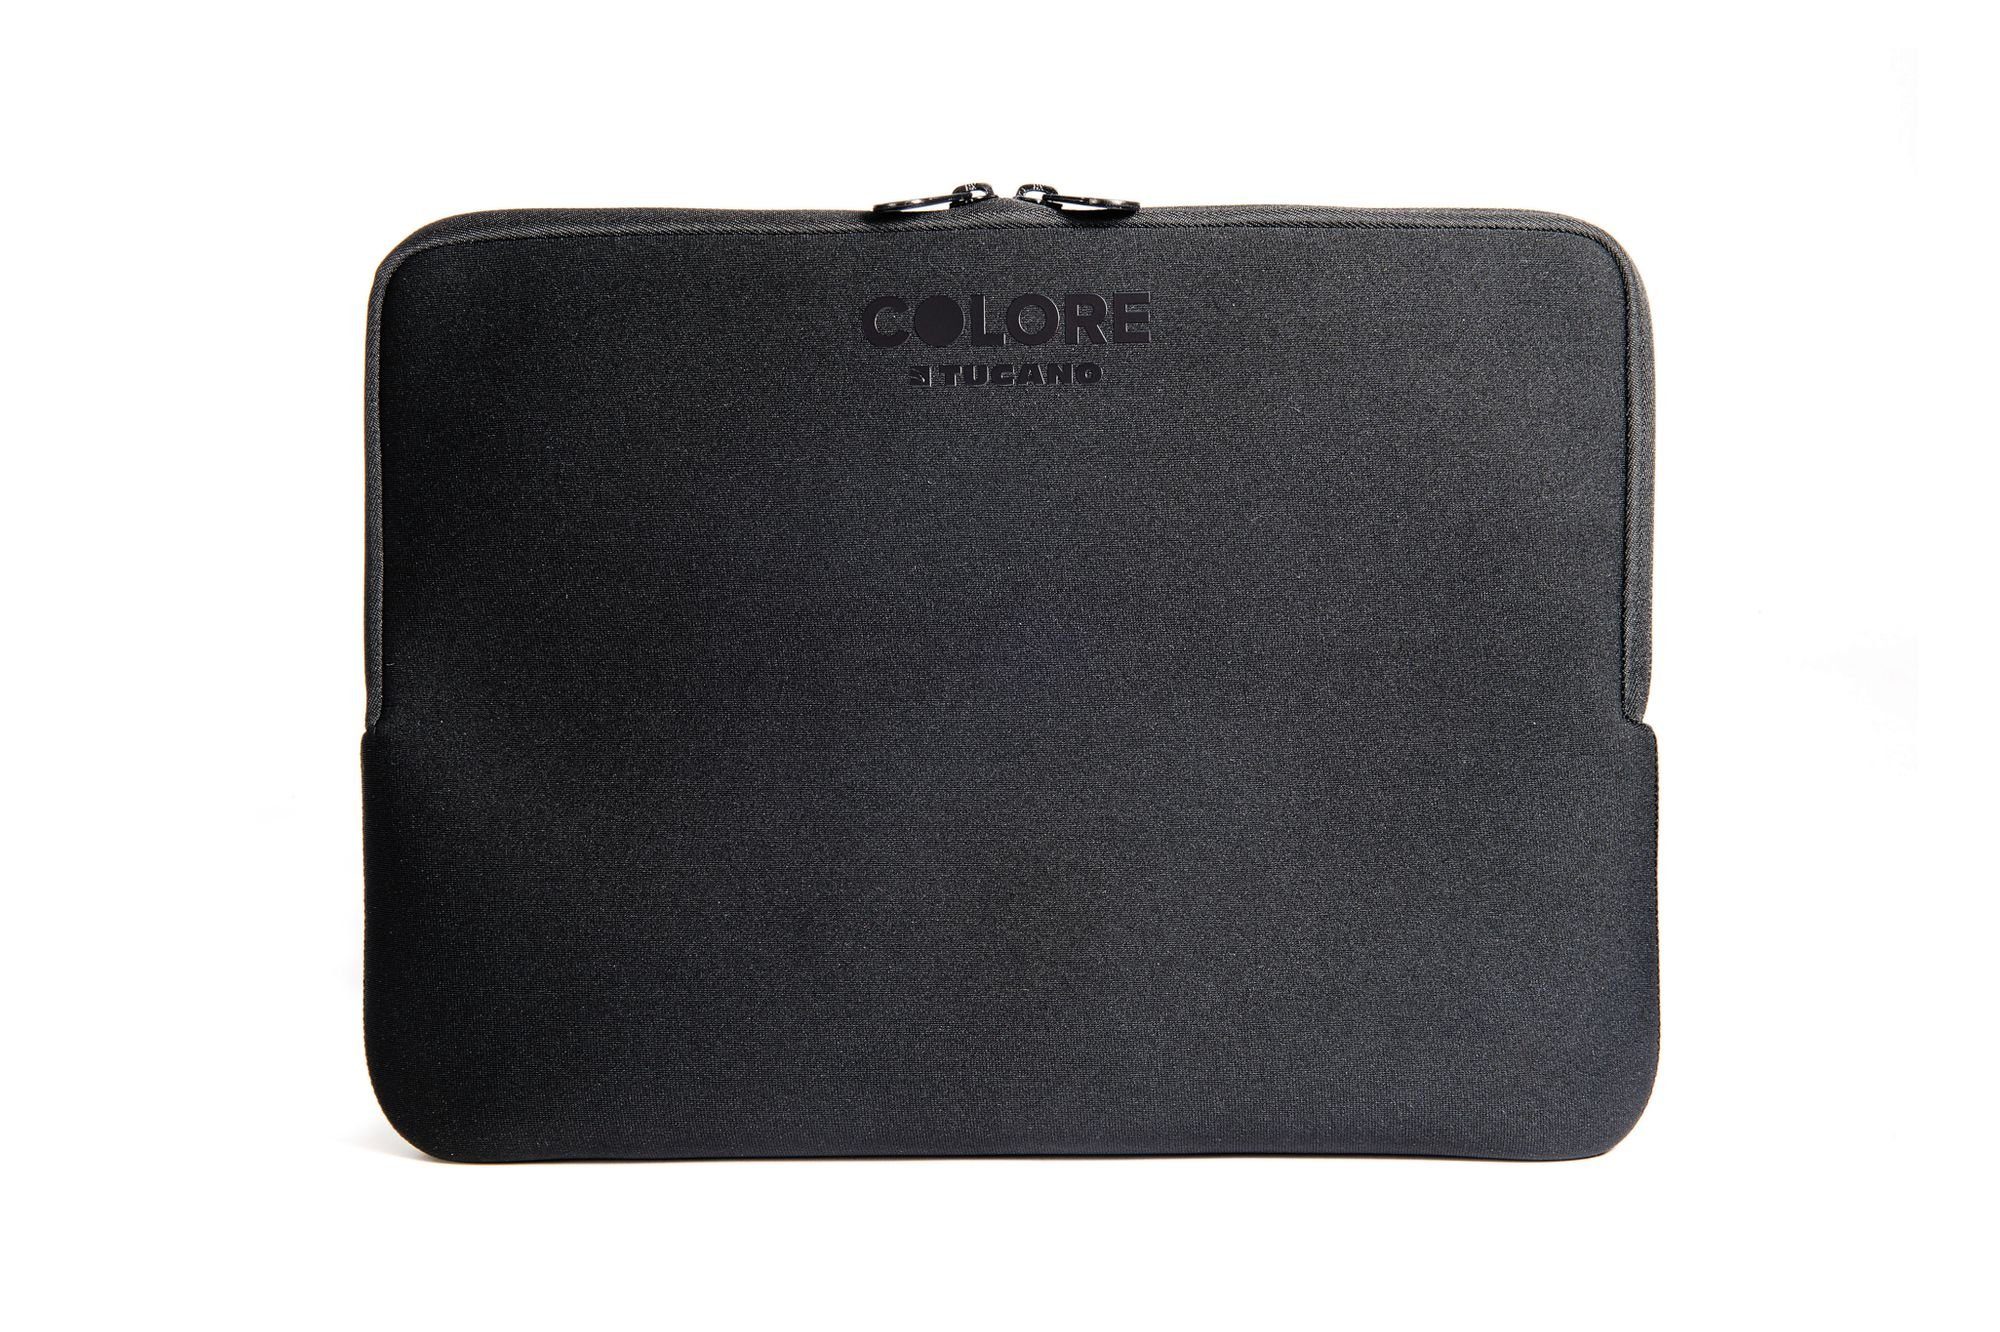 Tucano Laptop-Hülle Second Skin Colore Neoprenhülle für 17 18 Zoll  widescreen, schwarz, 17 - 18 Zoll widescreen Notebooks